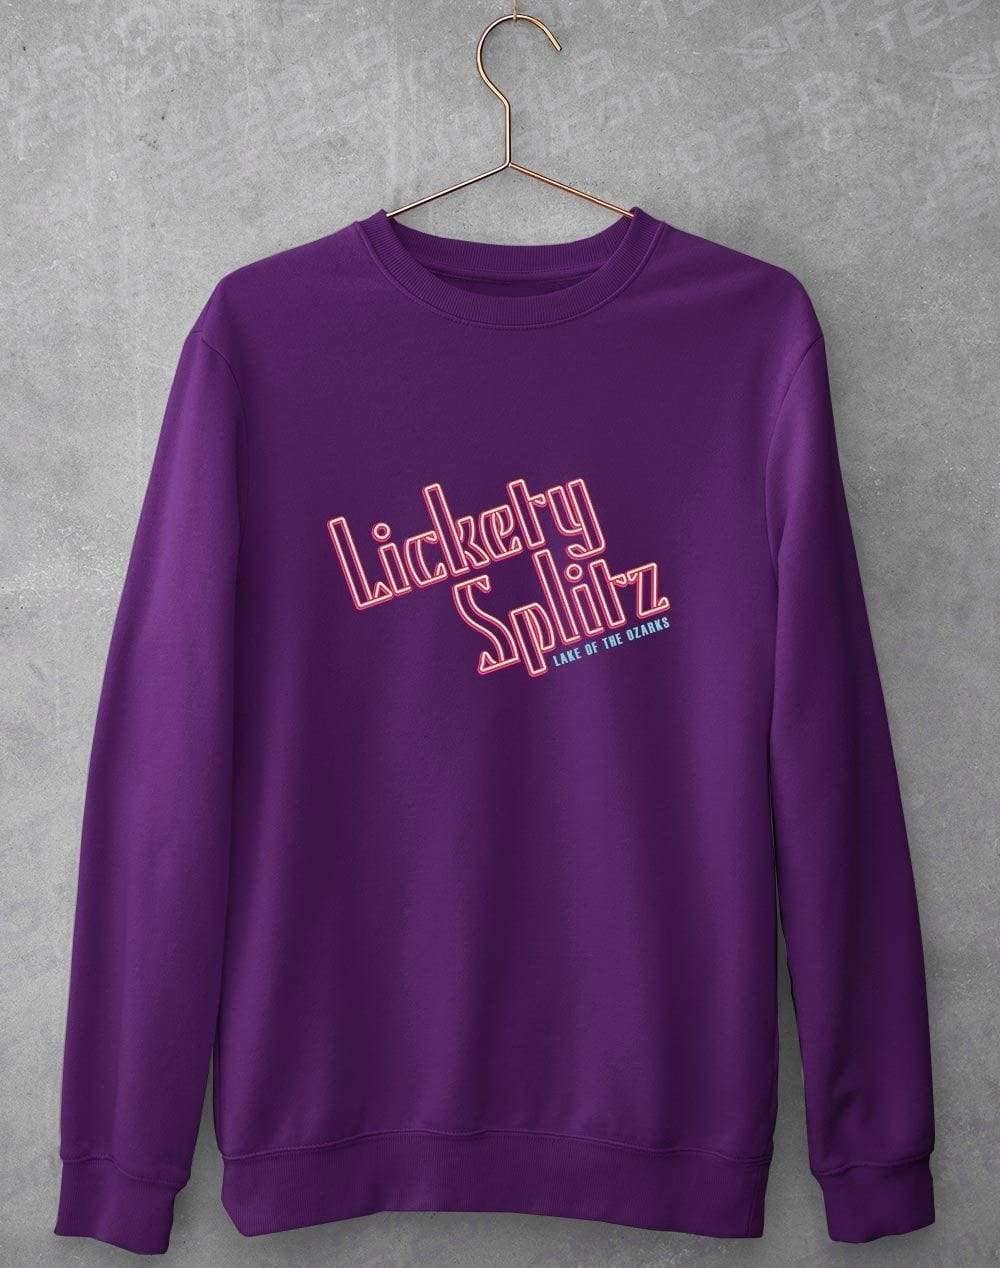 Lickety Splitz Sweatshirt S / Purple  - Off World Tees